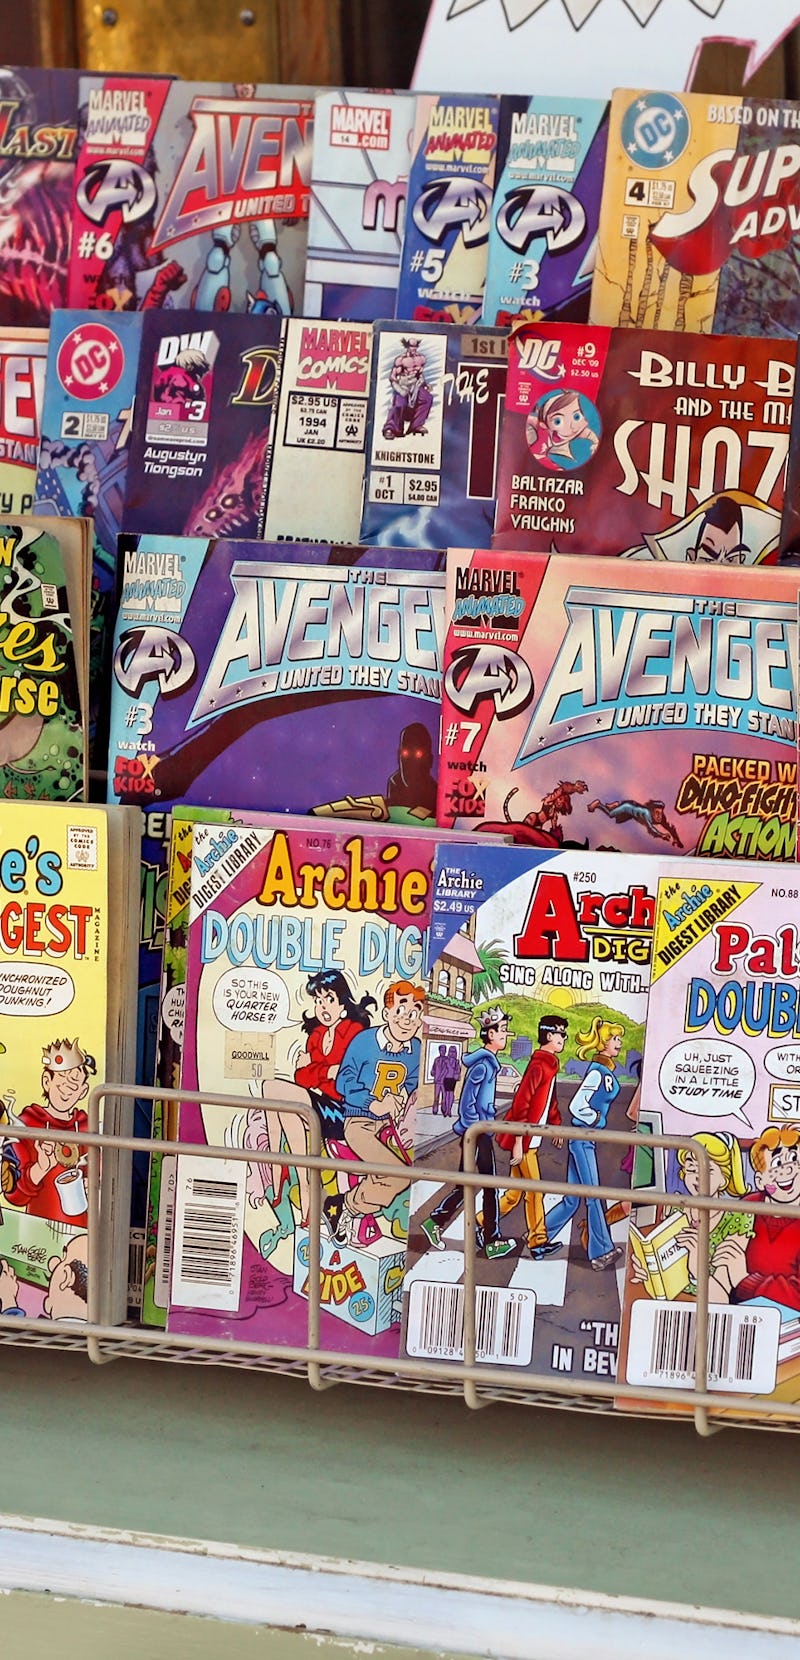 "Spokane, Washington, USA - August 25, 2012: Assortment of popular comic books for sale outside of a...